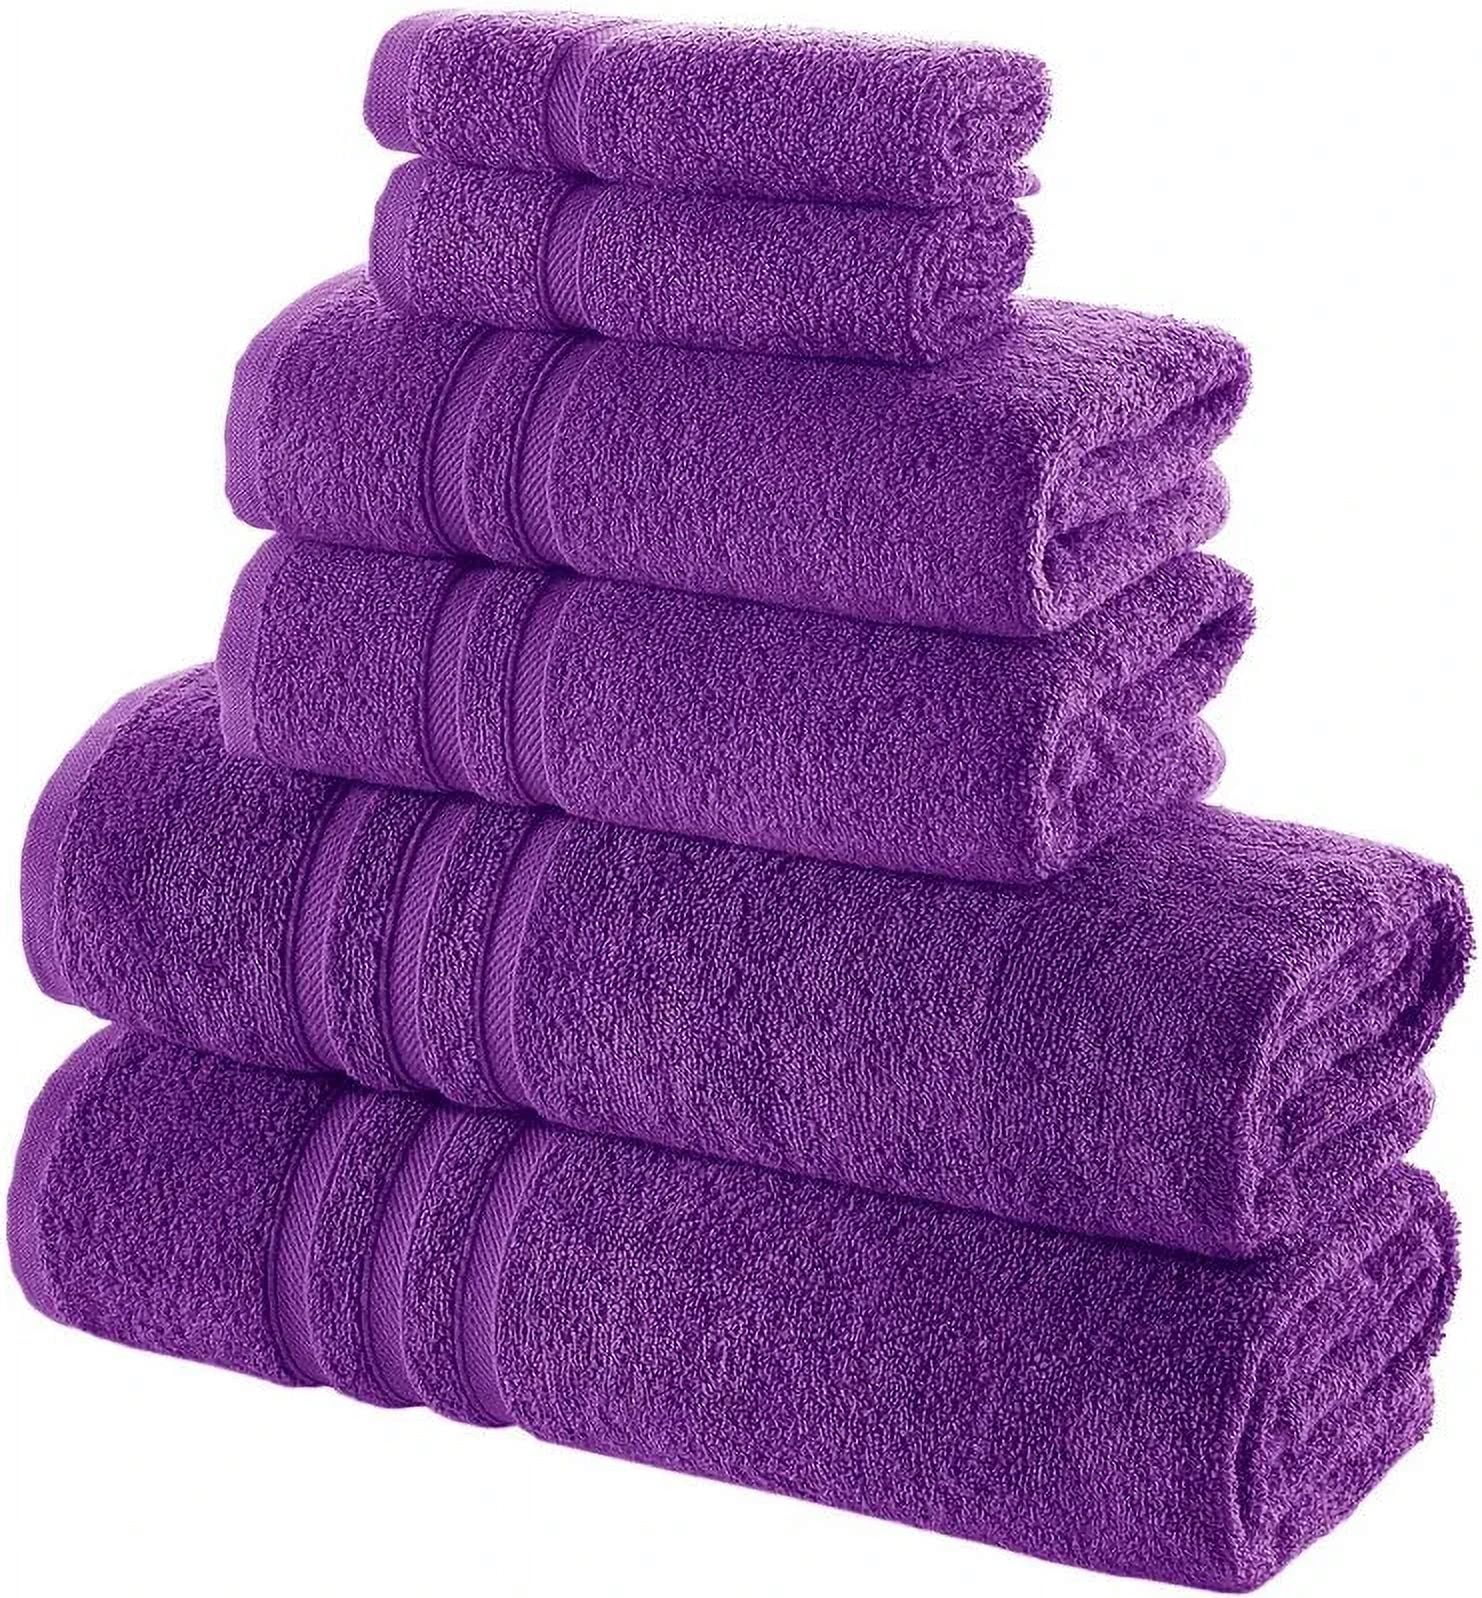 Towel Set for Bathroom 6 Piece, Super Soft Highly Absorbent Fluffy  Decorative Bath Sets, Turkish Towels, Spa & Hotel Quality 